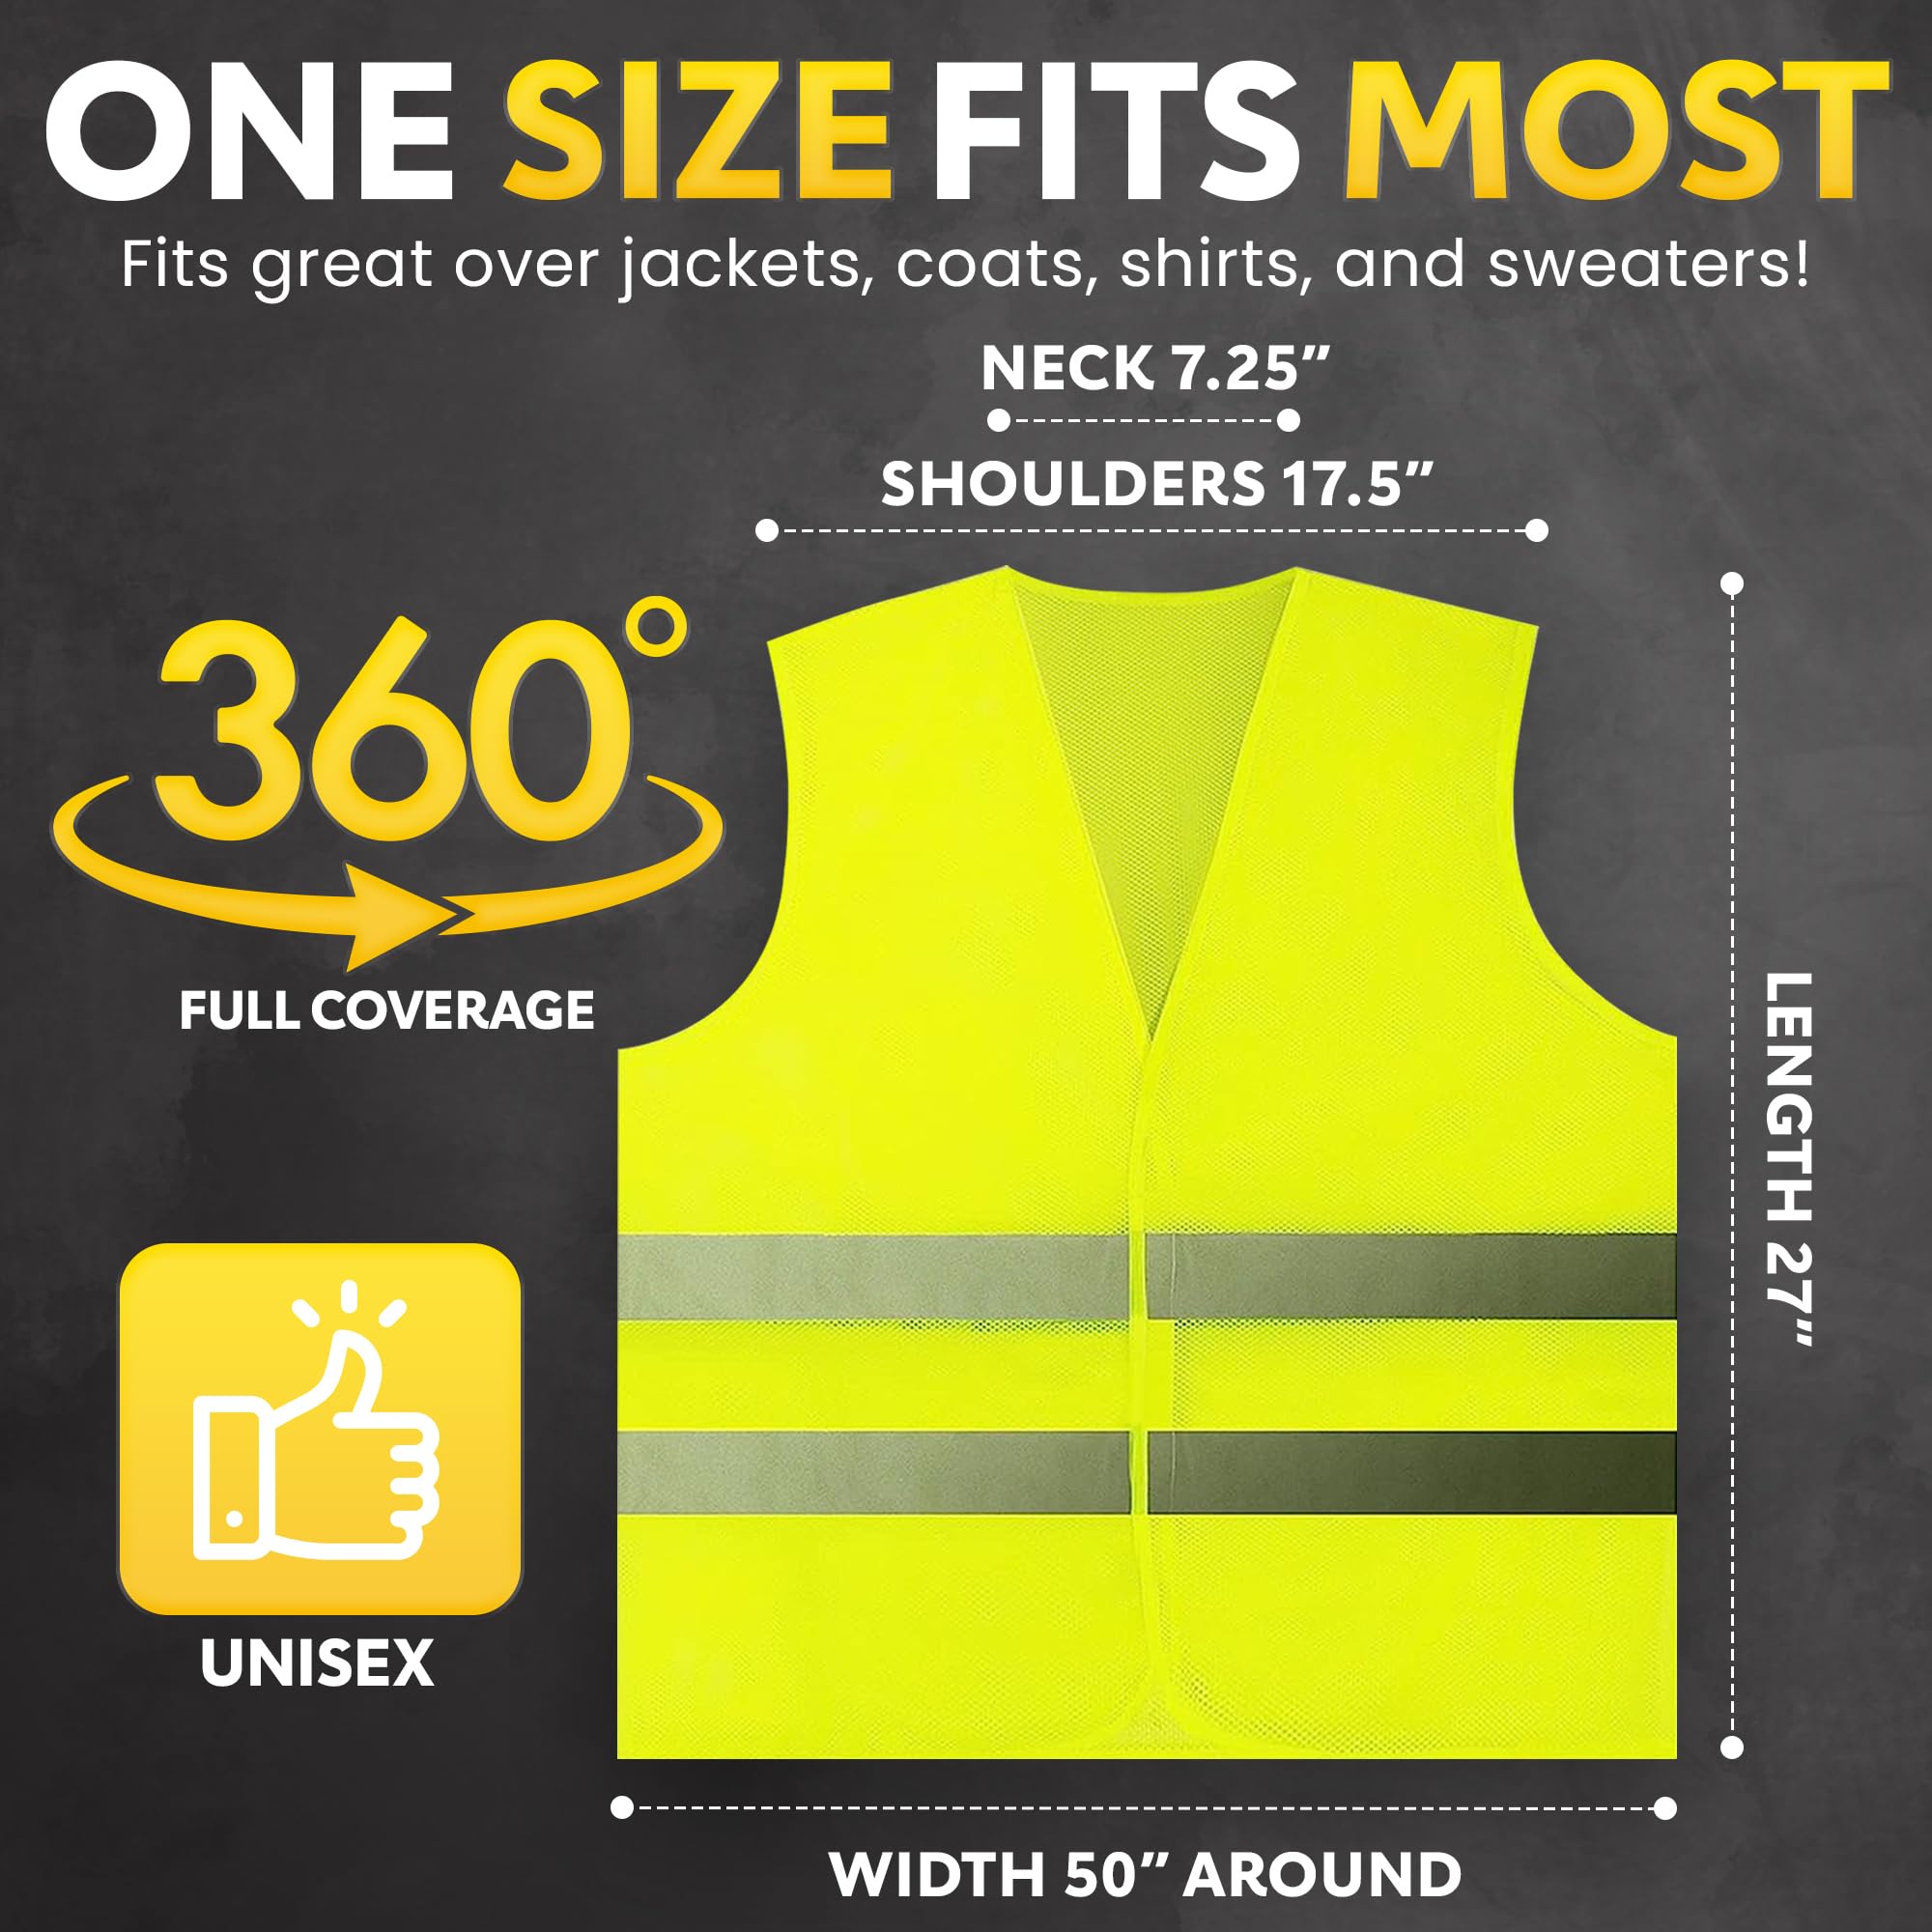 PeerBasics Safety Vests 10 Pack - Yellow Reflective High Visibility, Hi Vis Silver Strip, Men Women, Work, Cycling, Runner, Surveyor, Volunteer, Crossing Guard, Road, Construction, Neon (Mesh, 10)